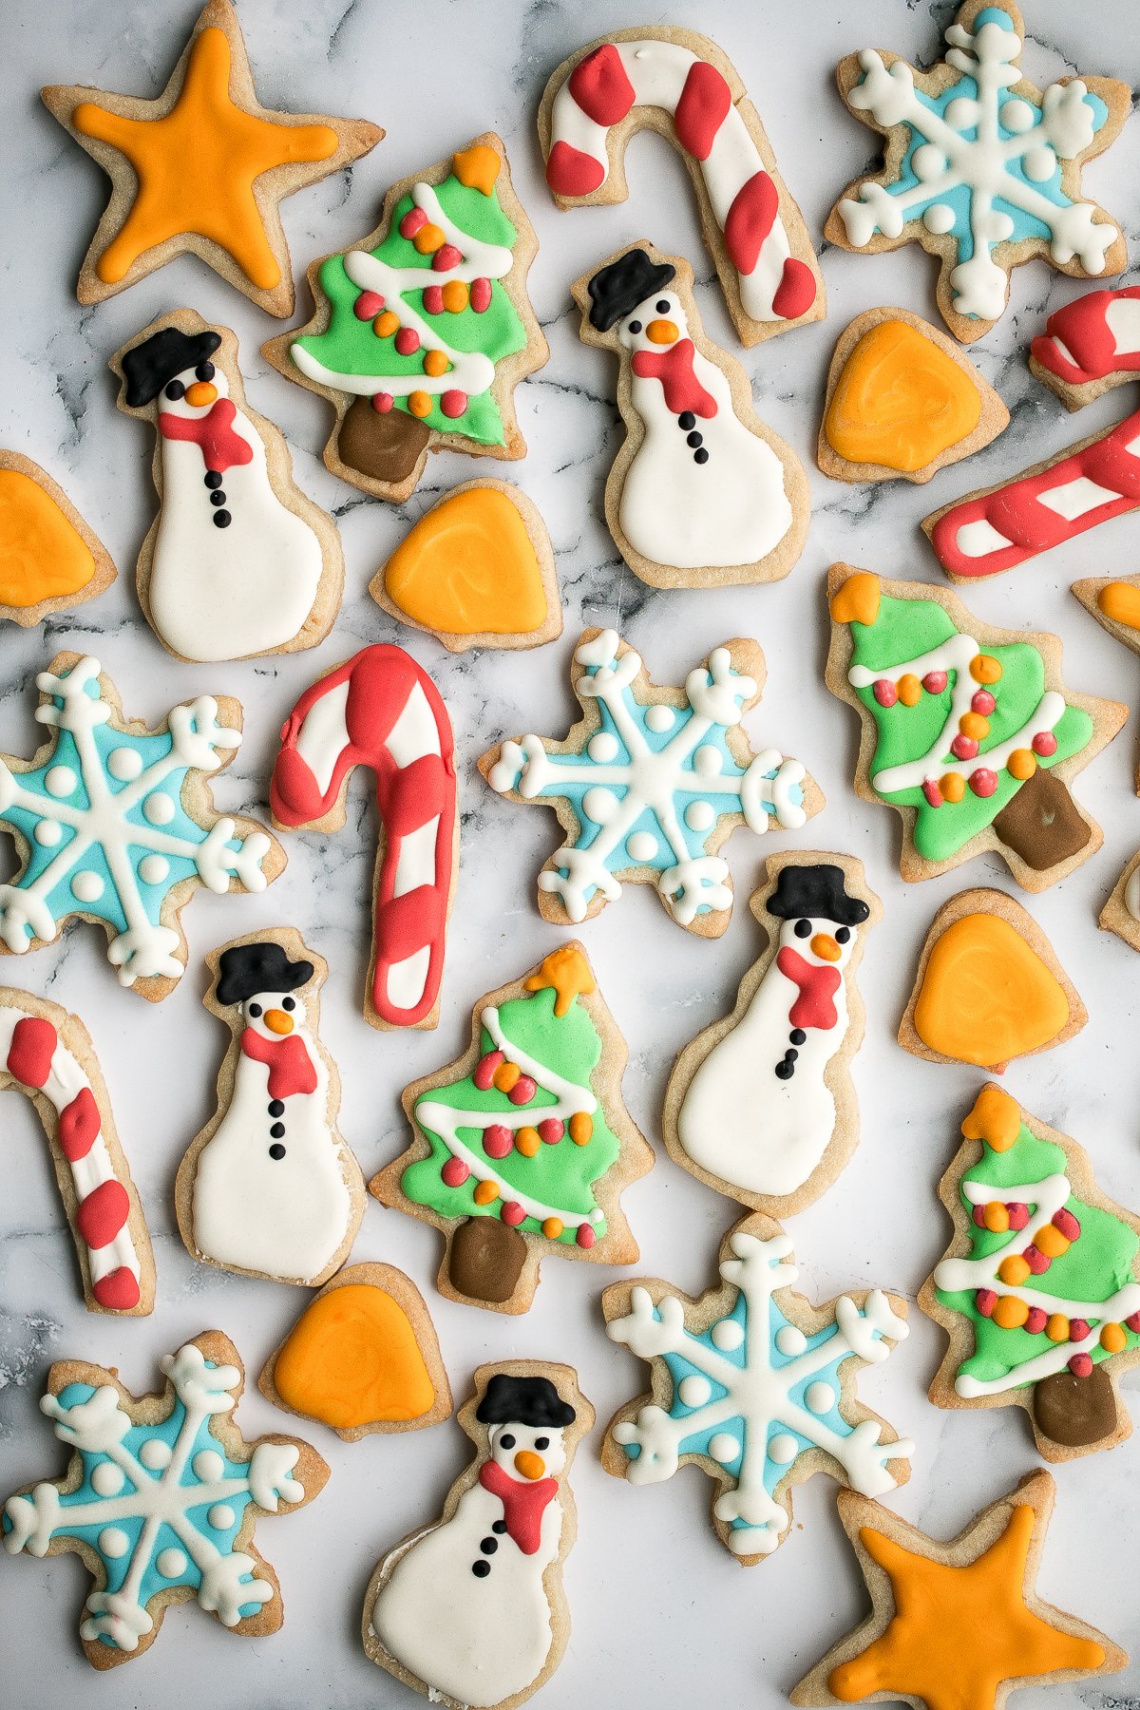 Christmas Sugar Cookies with Royal Icing